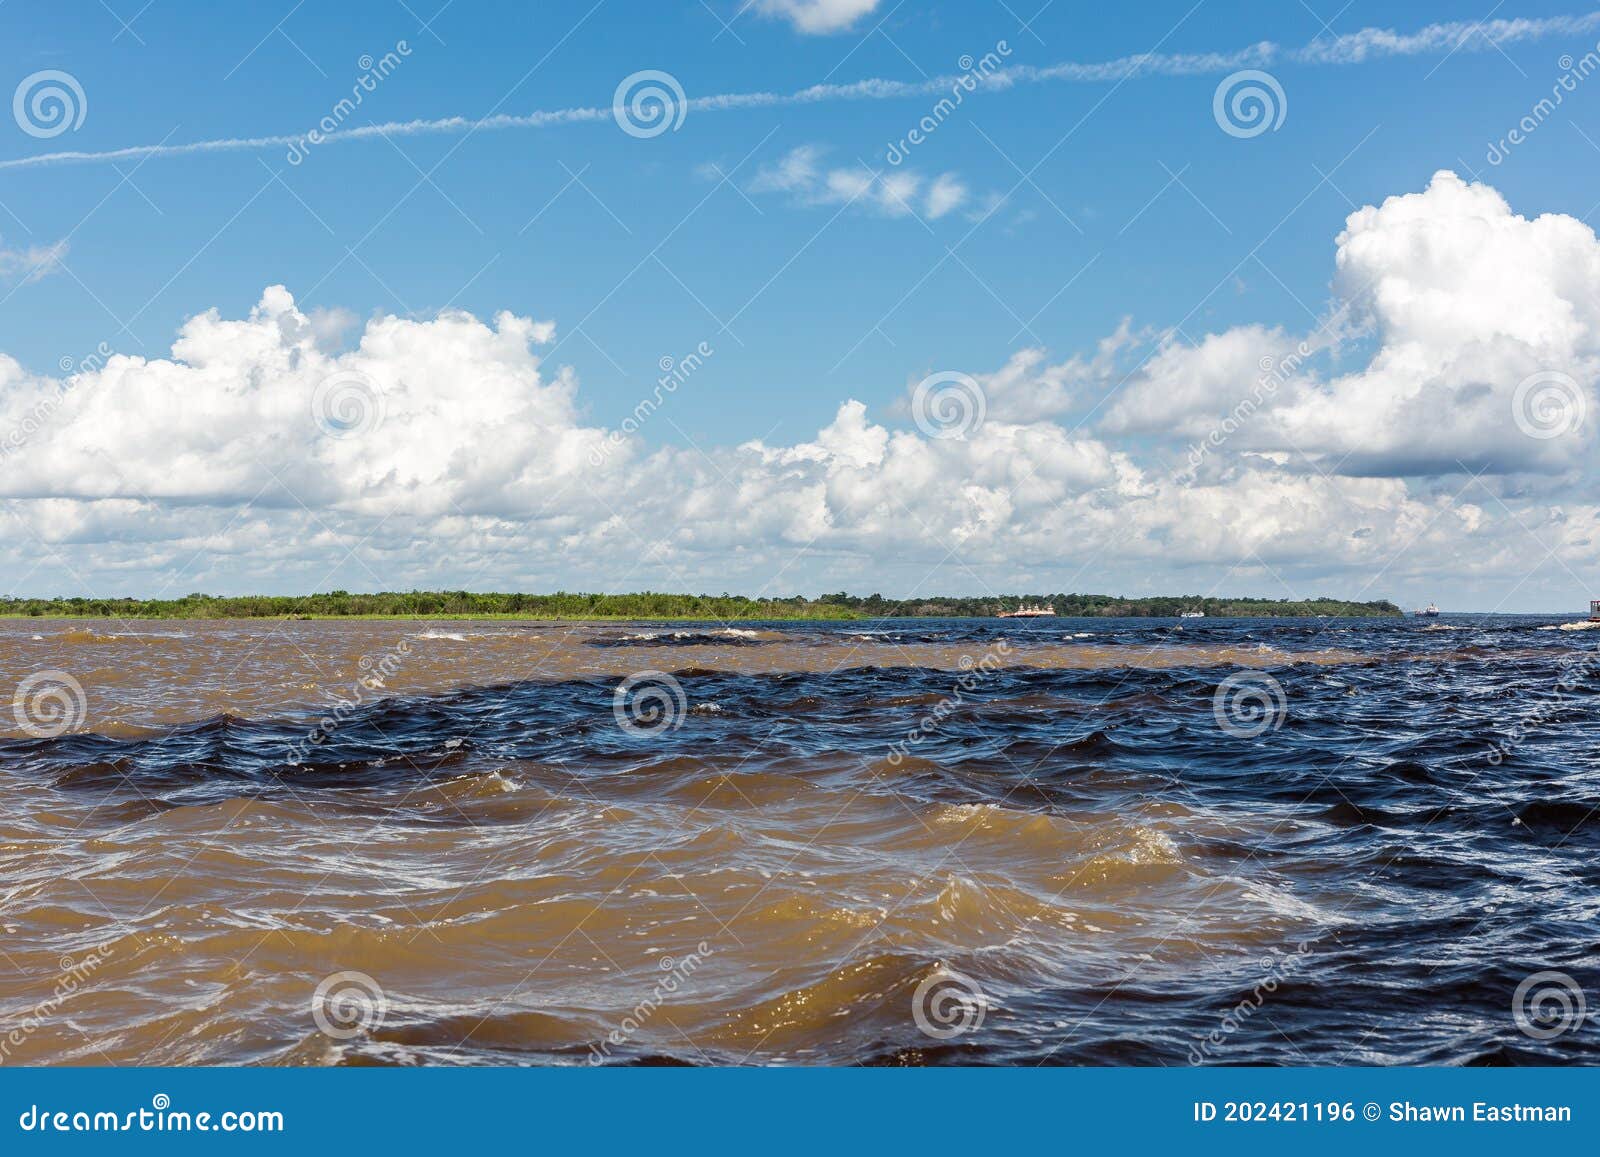 meeting of waters encontro das ÃÂguas as the rio negro merges with the amazon river in the state of amazonas, brazil, south ameri